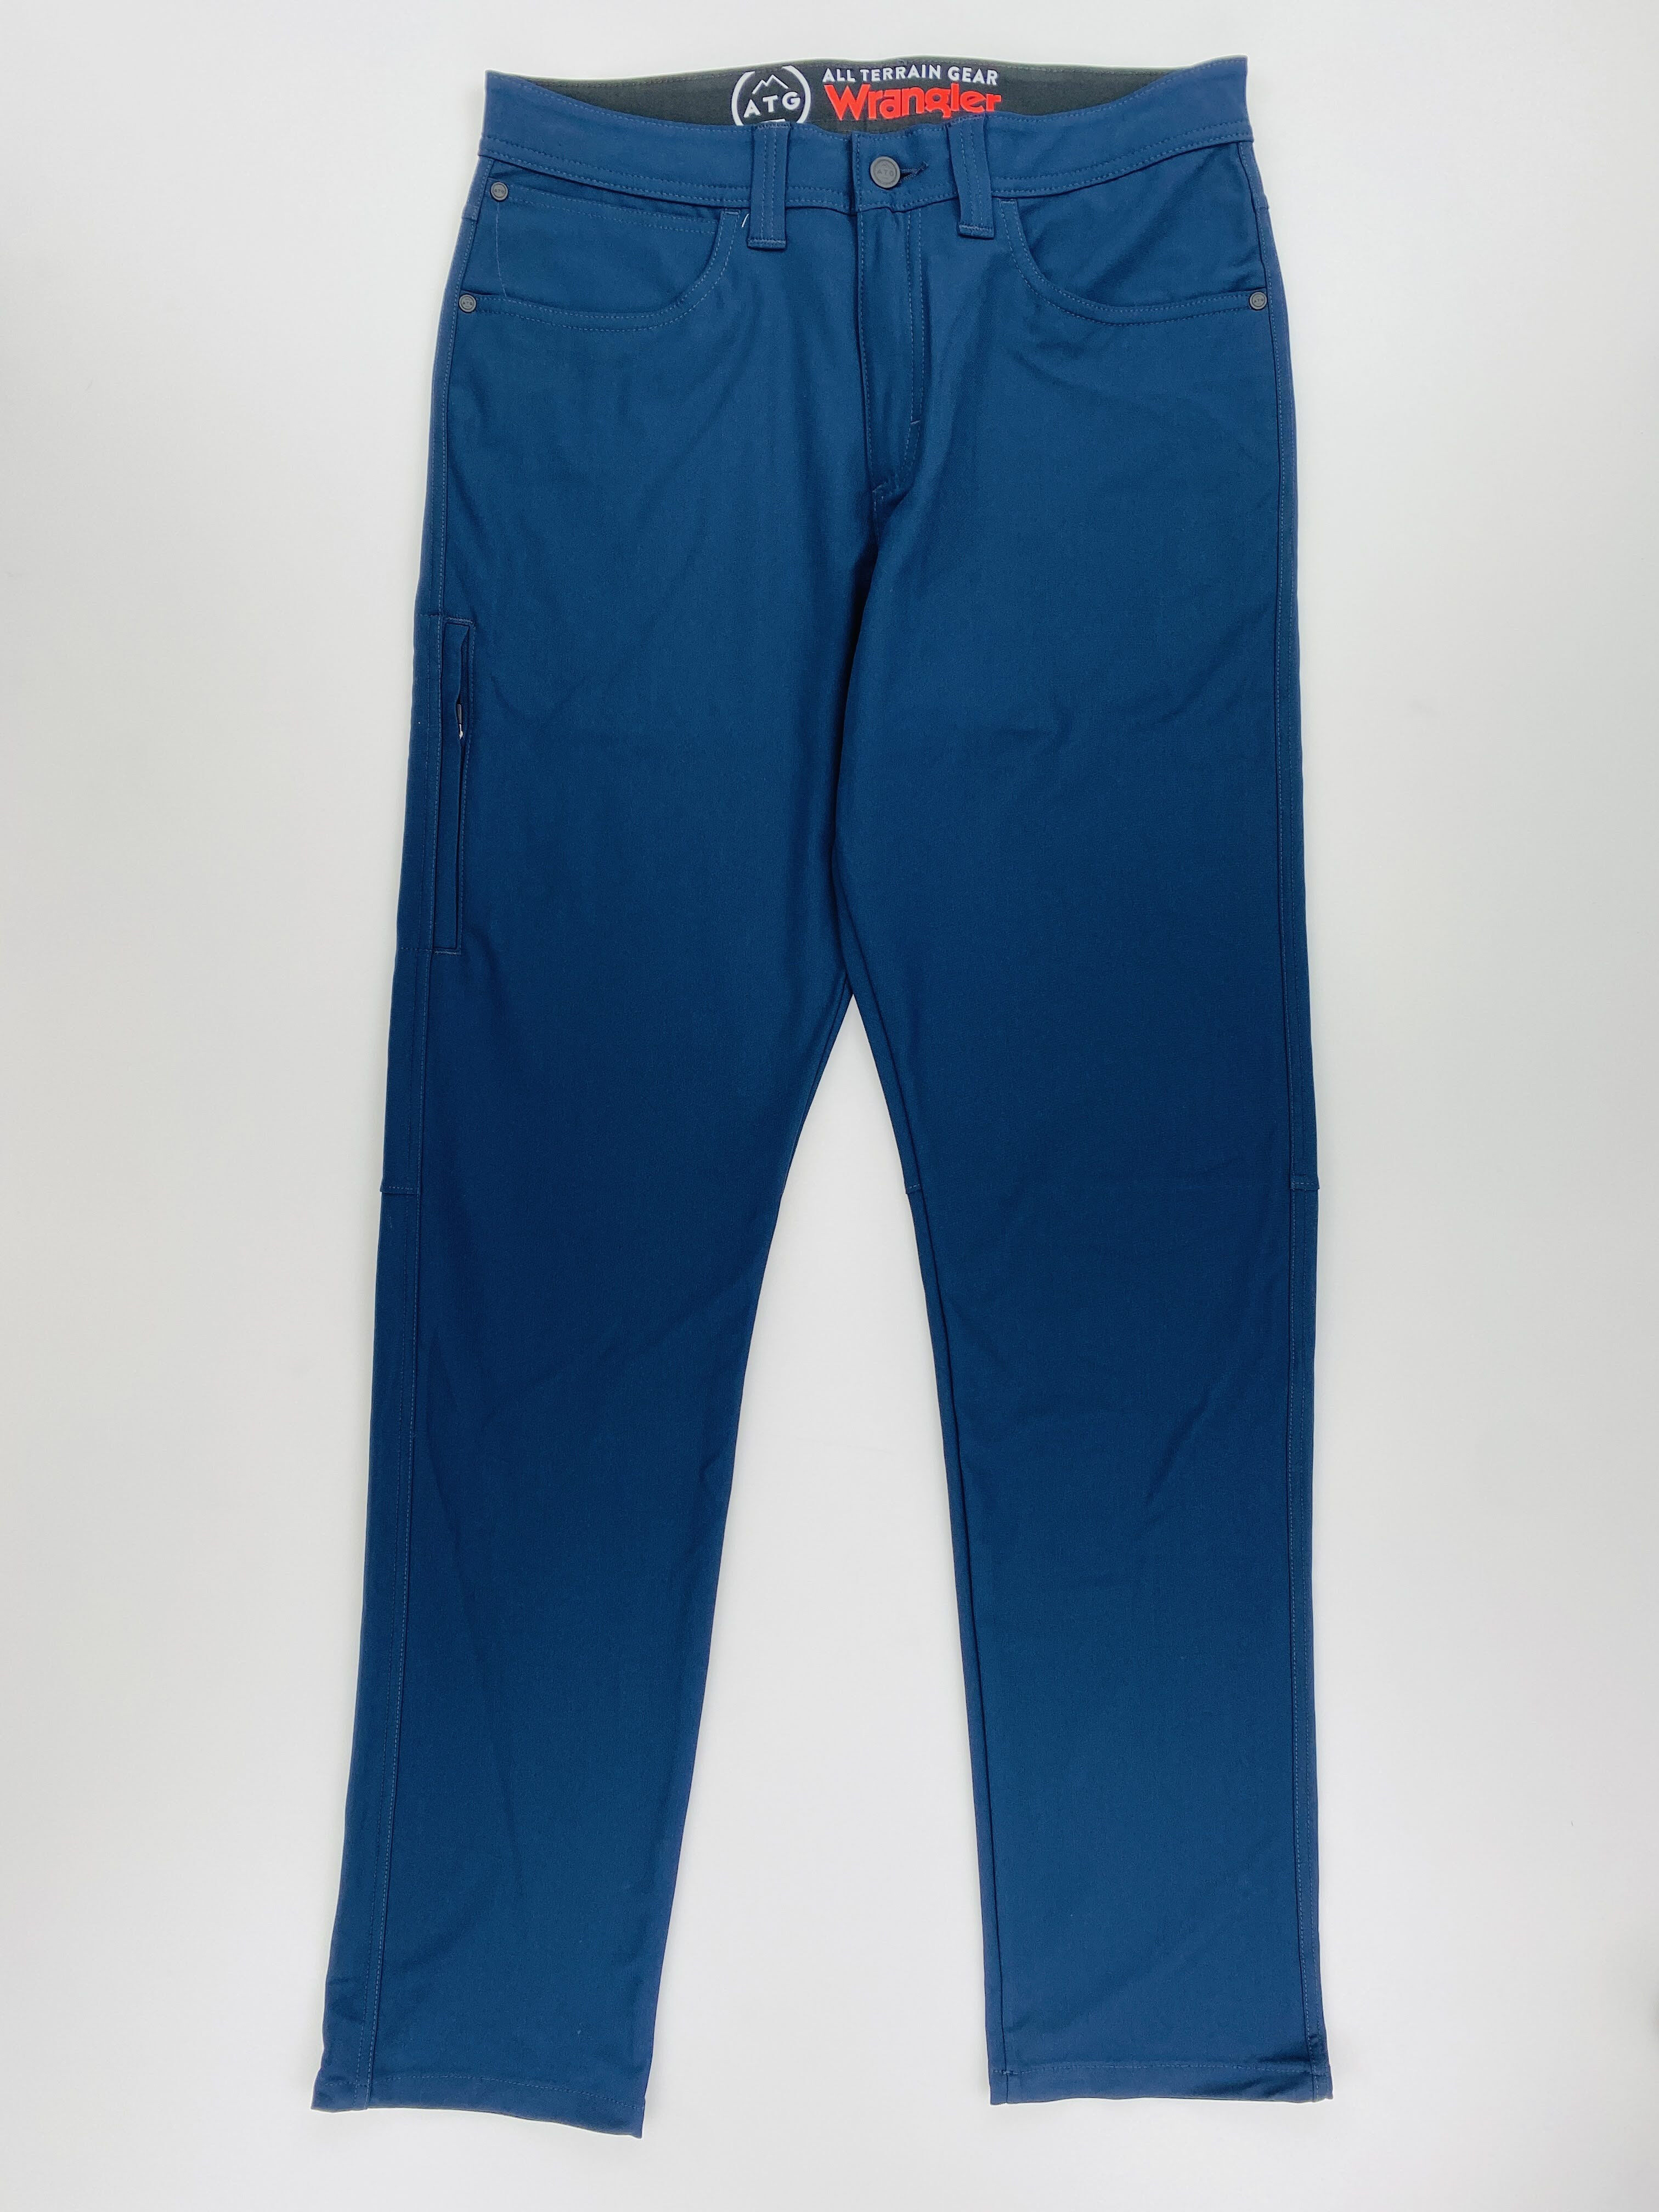 Wrangler Fwds 5 Pocket Pants - Second Hand Walking trousers - Men's - Blue  - US 32 | Hardloop